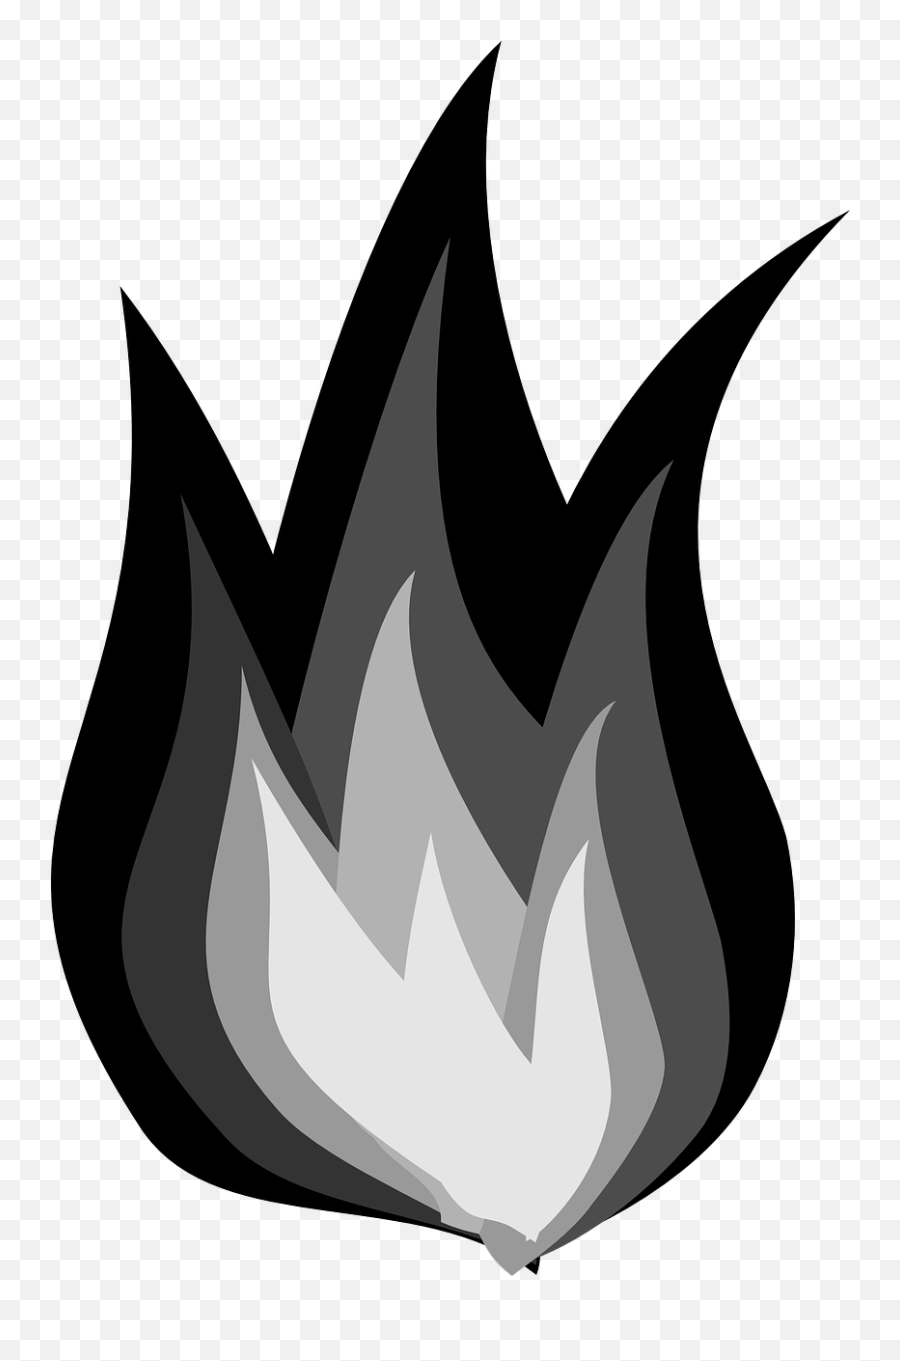 Fire Flames Burn Heat Gray - Black And White Clip Art Flames Emoji,How To Draw The Fire Emoji